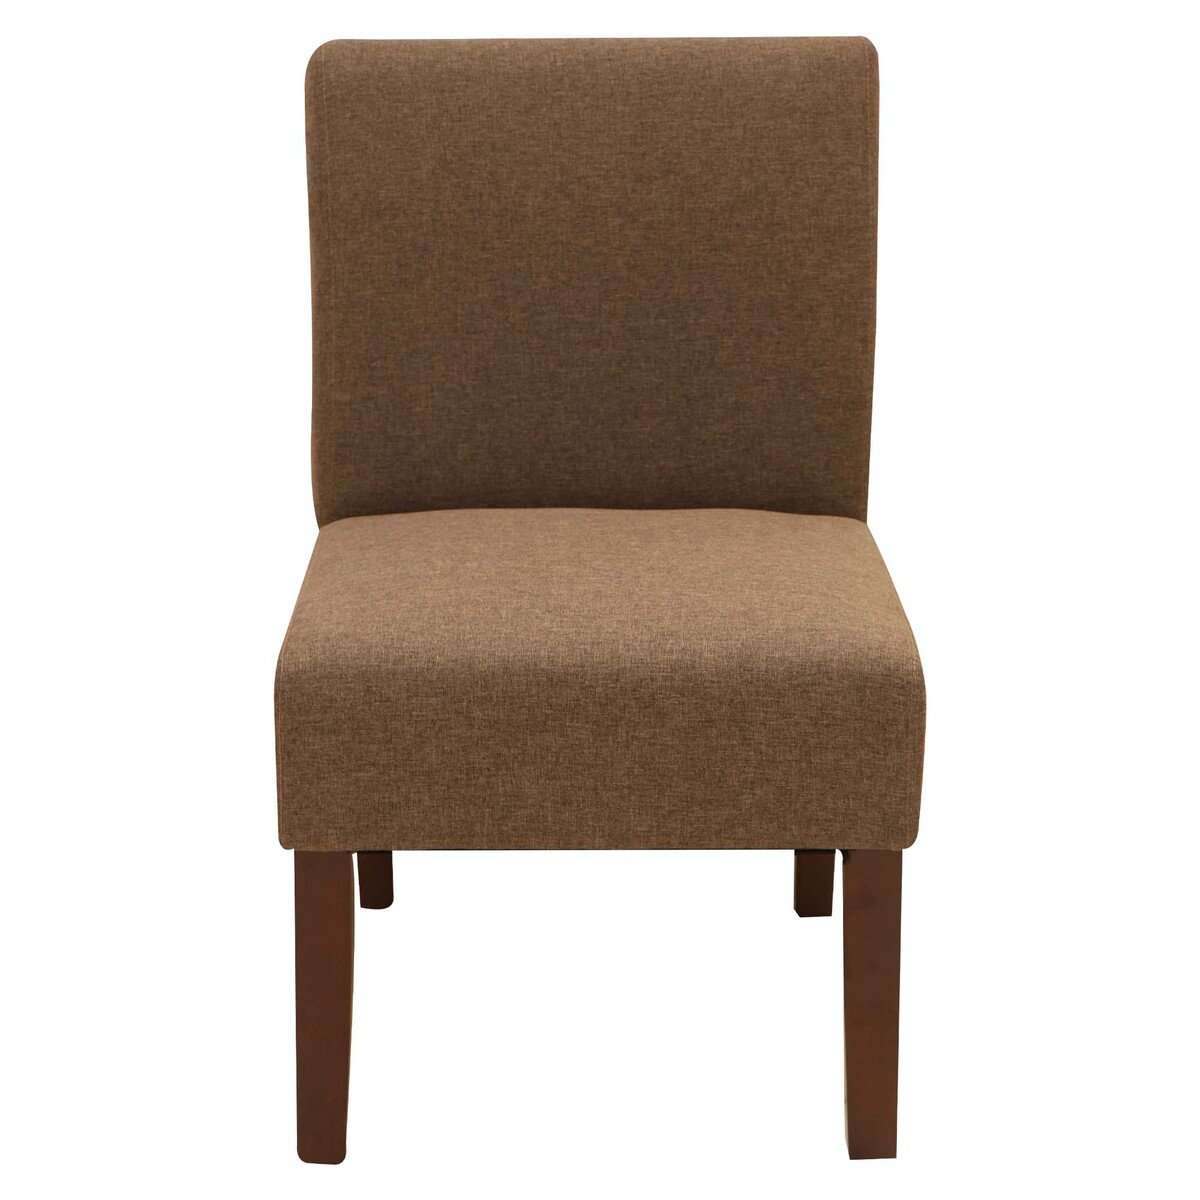 Maple Leaf Chair MLM609222STP Brown,Size:78x60x48 Cm (HxWxL)